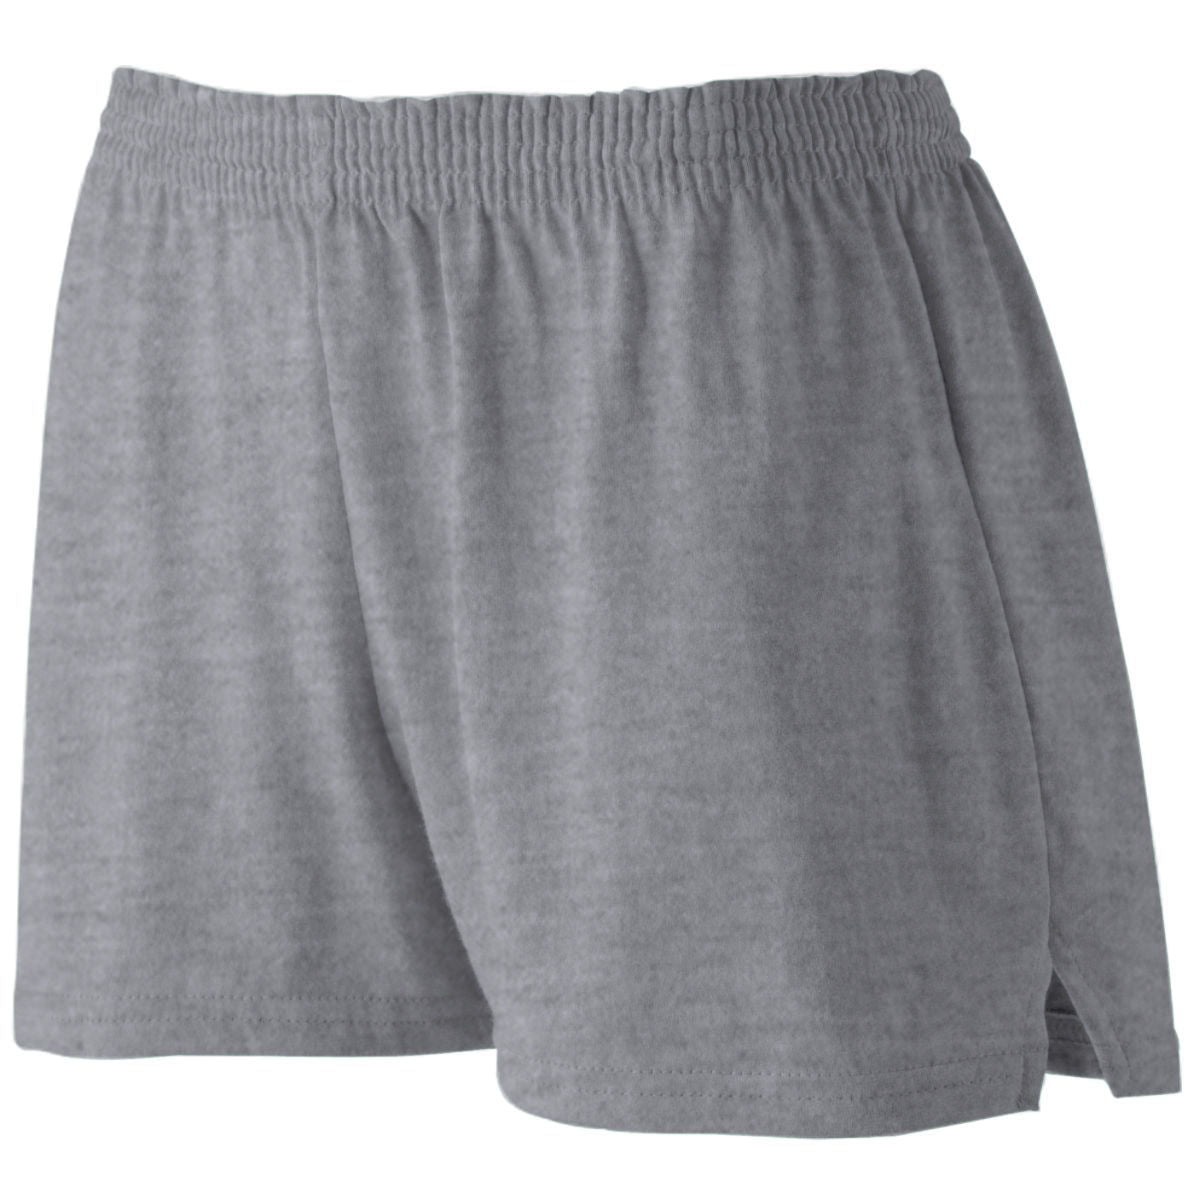 Ladies Junior Fit Jersey Shorts - 987